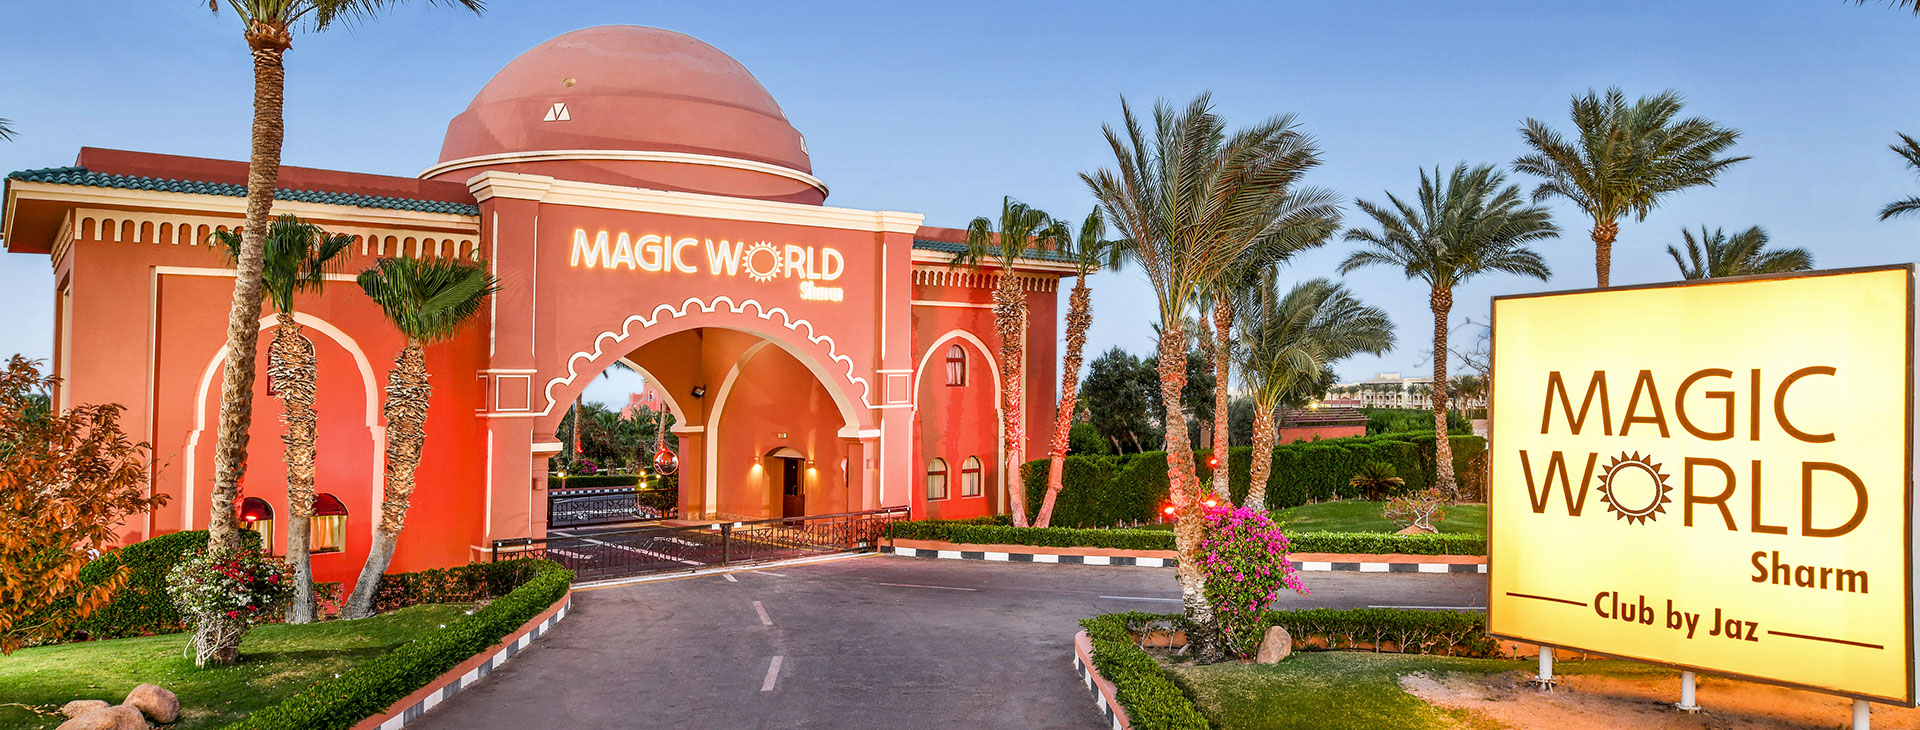 Magic World Sharm - Club by Jaz Obrázek12